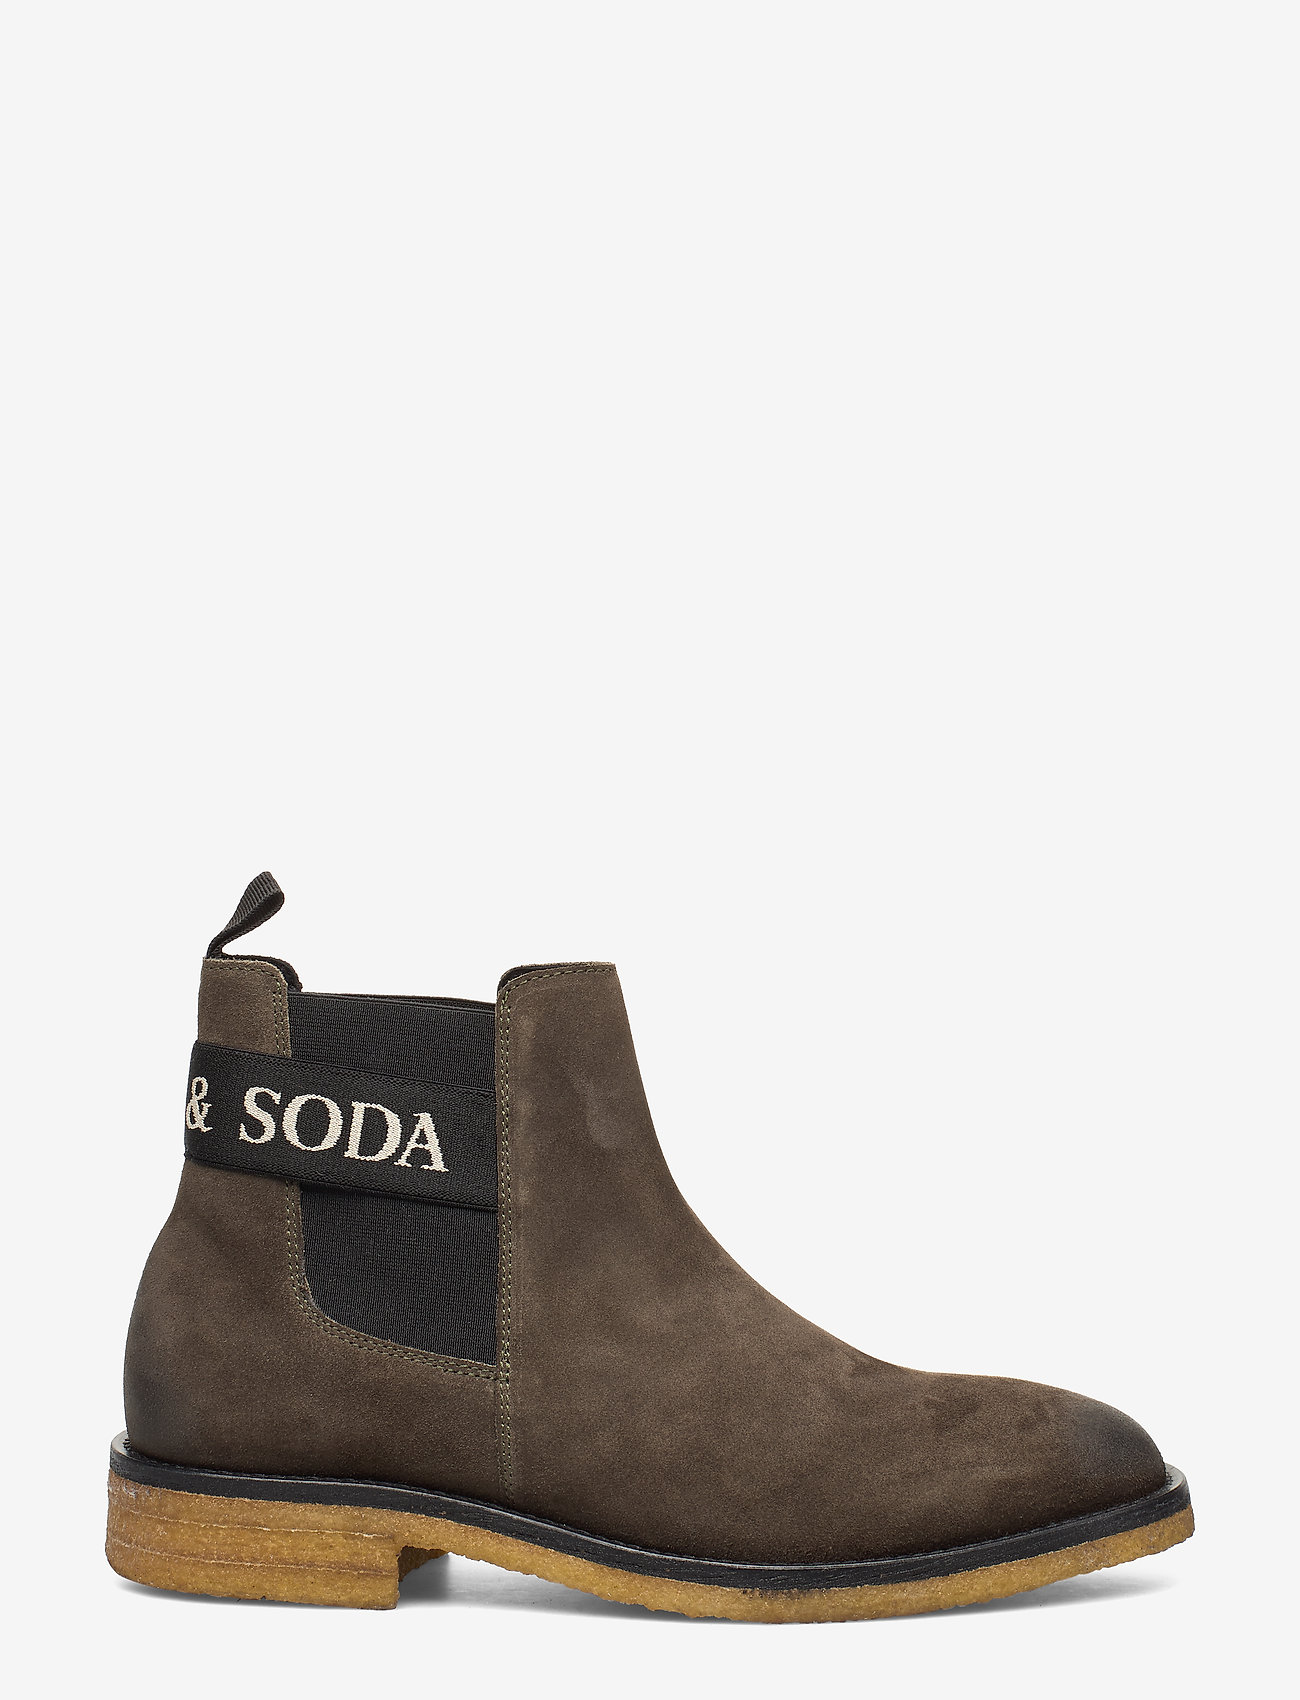 soda chelsea boots